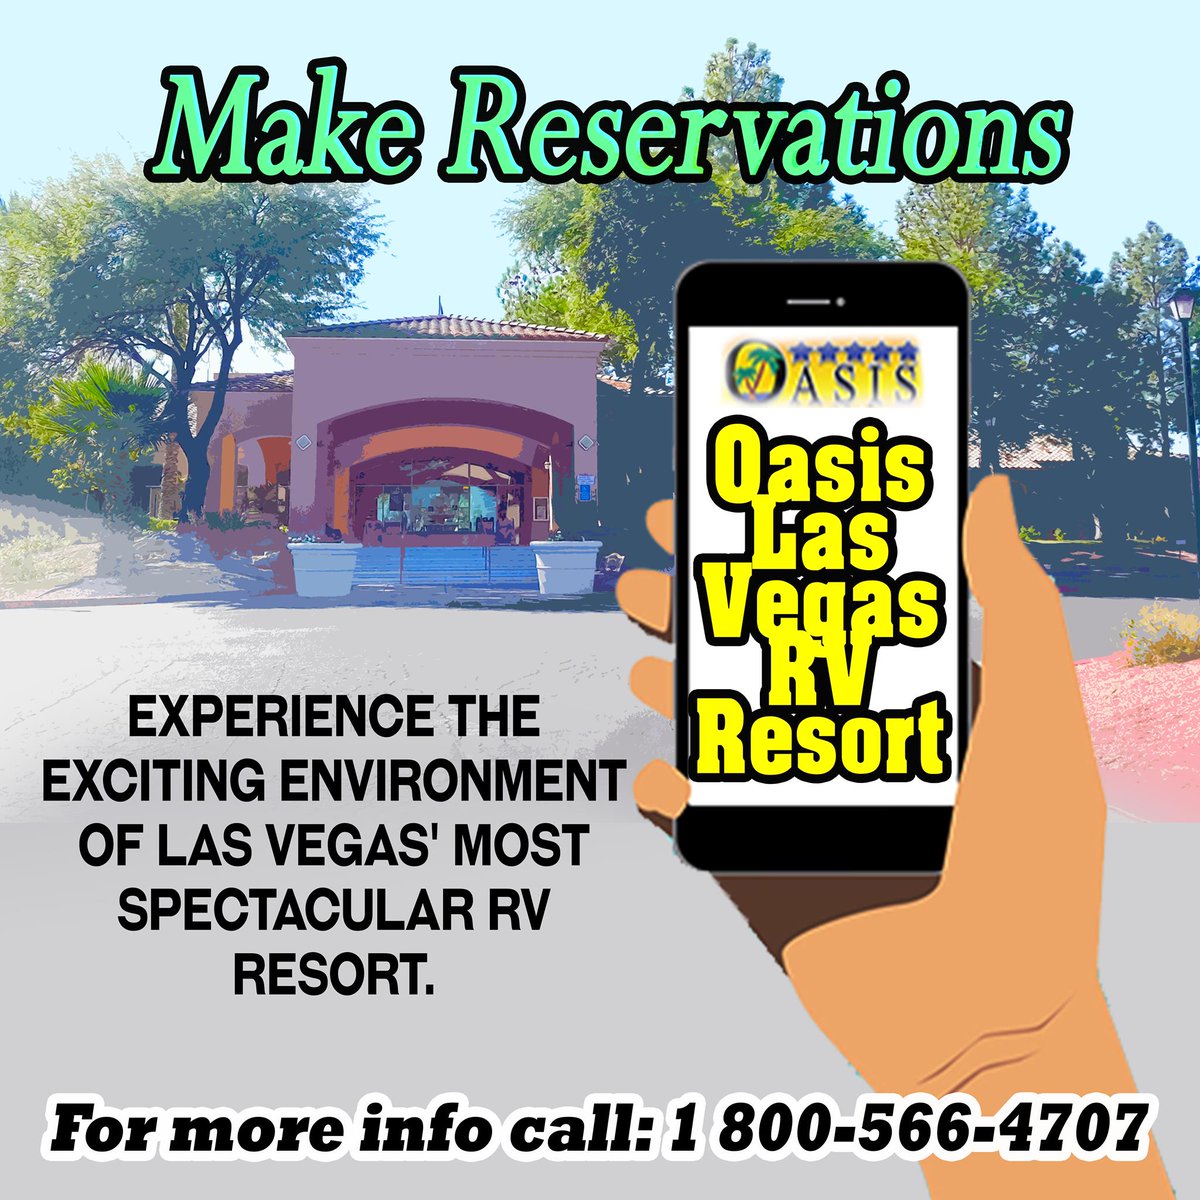 Oasis Las Vegas RV Resort
oasislasvegasrvresort.com #dinnerspecials #horseshoepit #frontdesk #travel #movienight #concierge #reservations #phillysteak #monthlyrates #cabana #dogrun